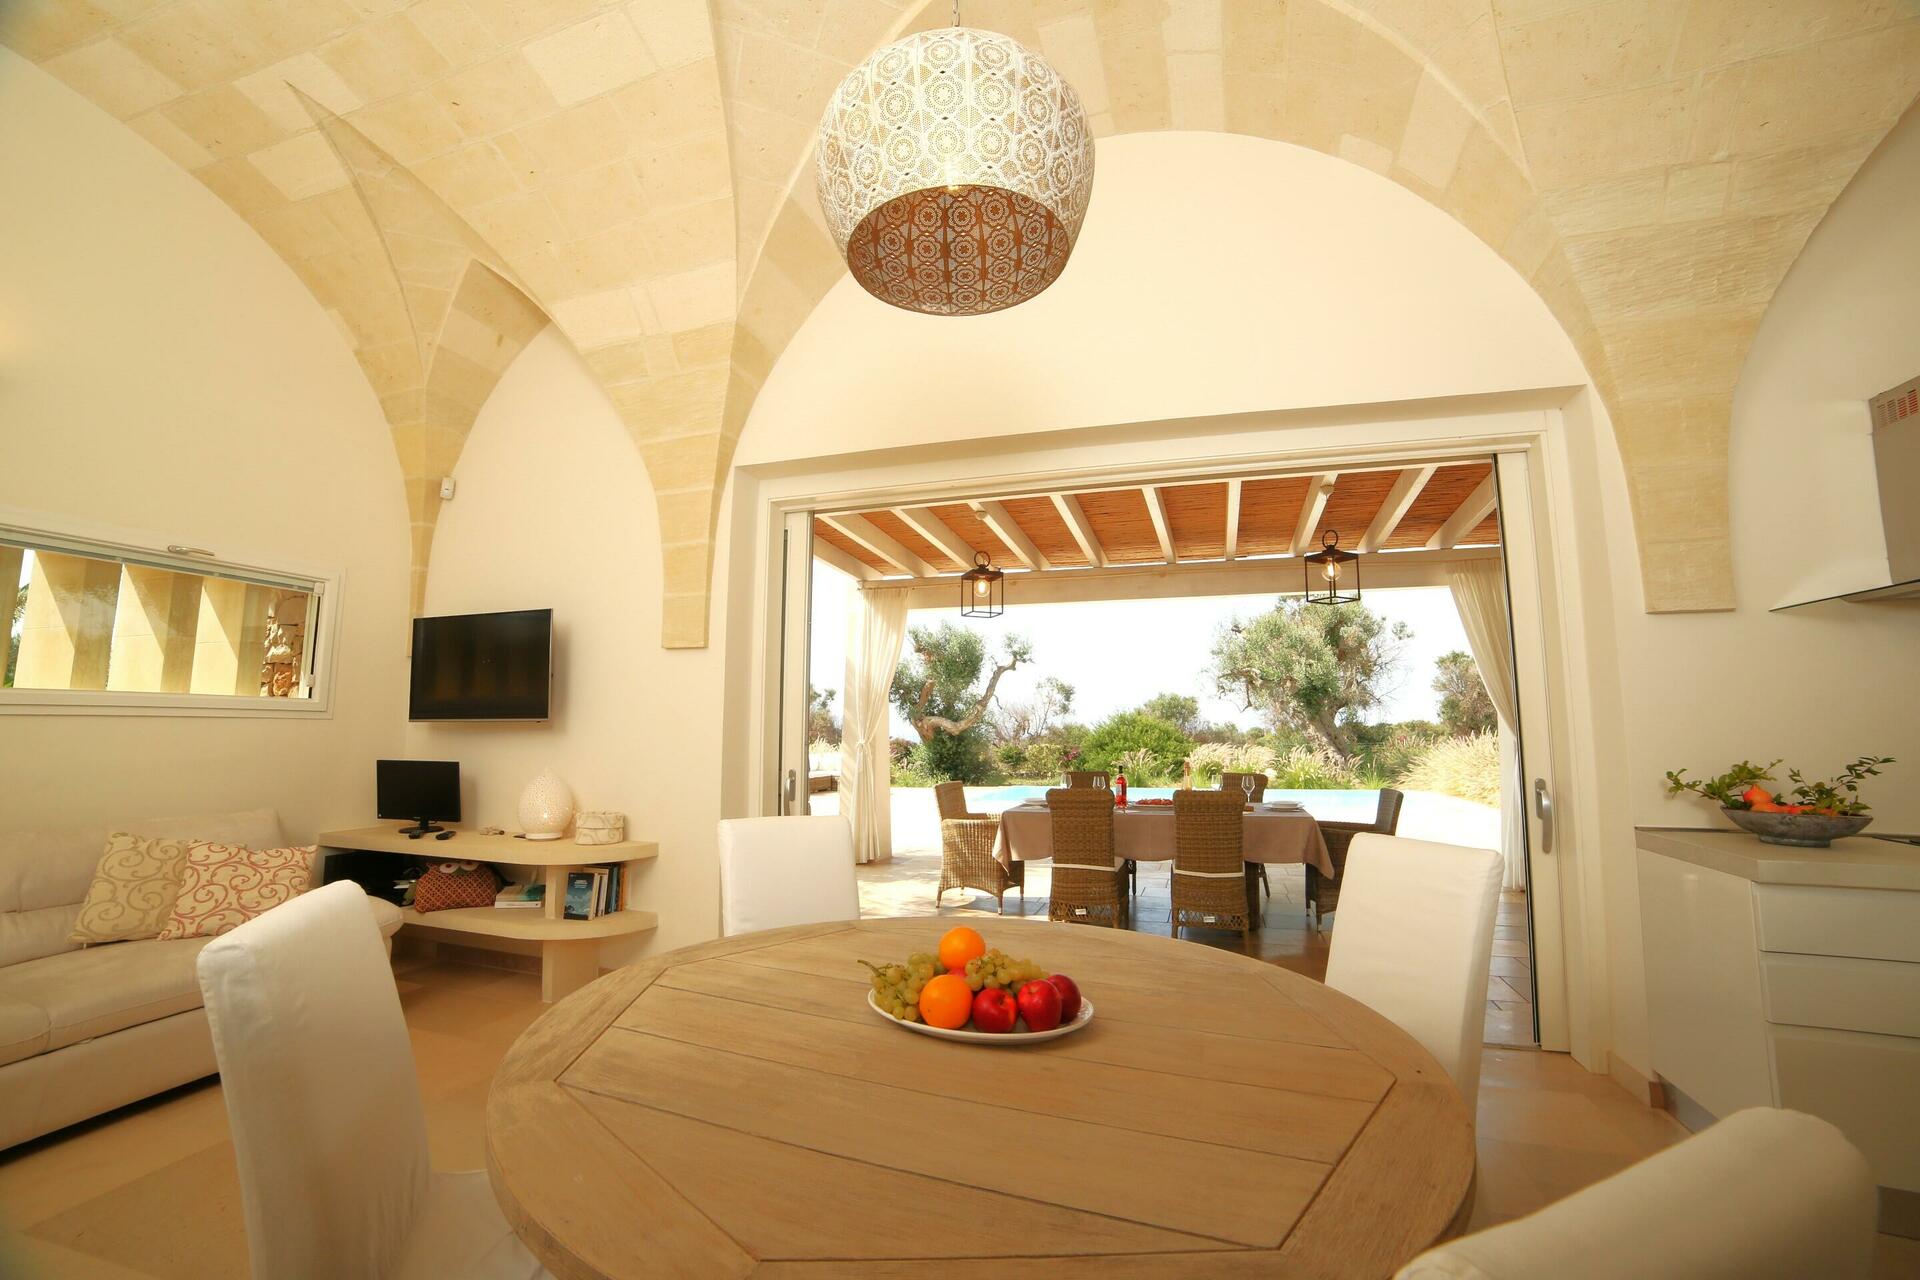 ground floor - living area with kitchen and dining tableiosa_Santa_Maria_di_Leuca_piscina (32)